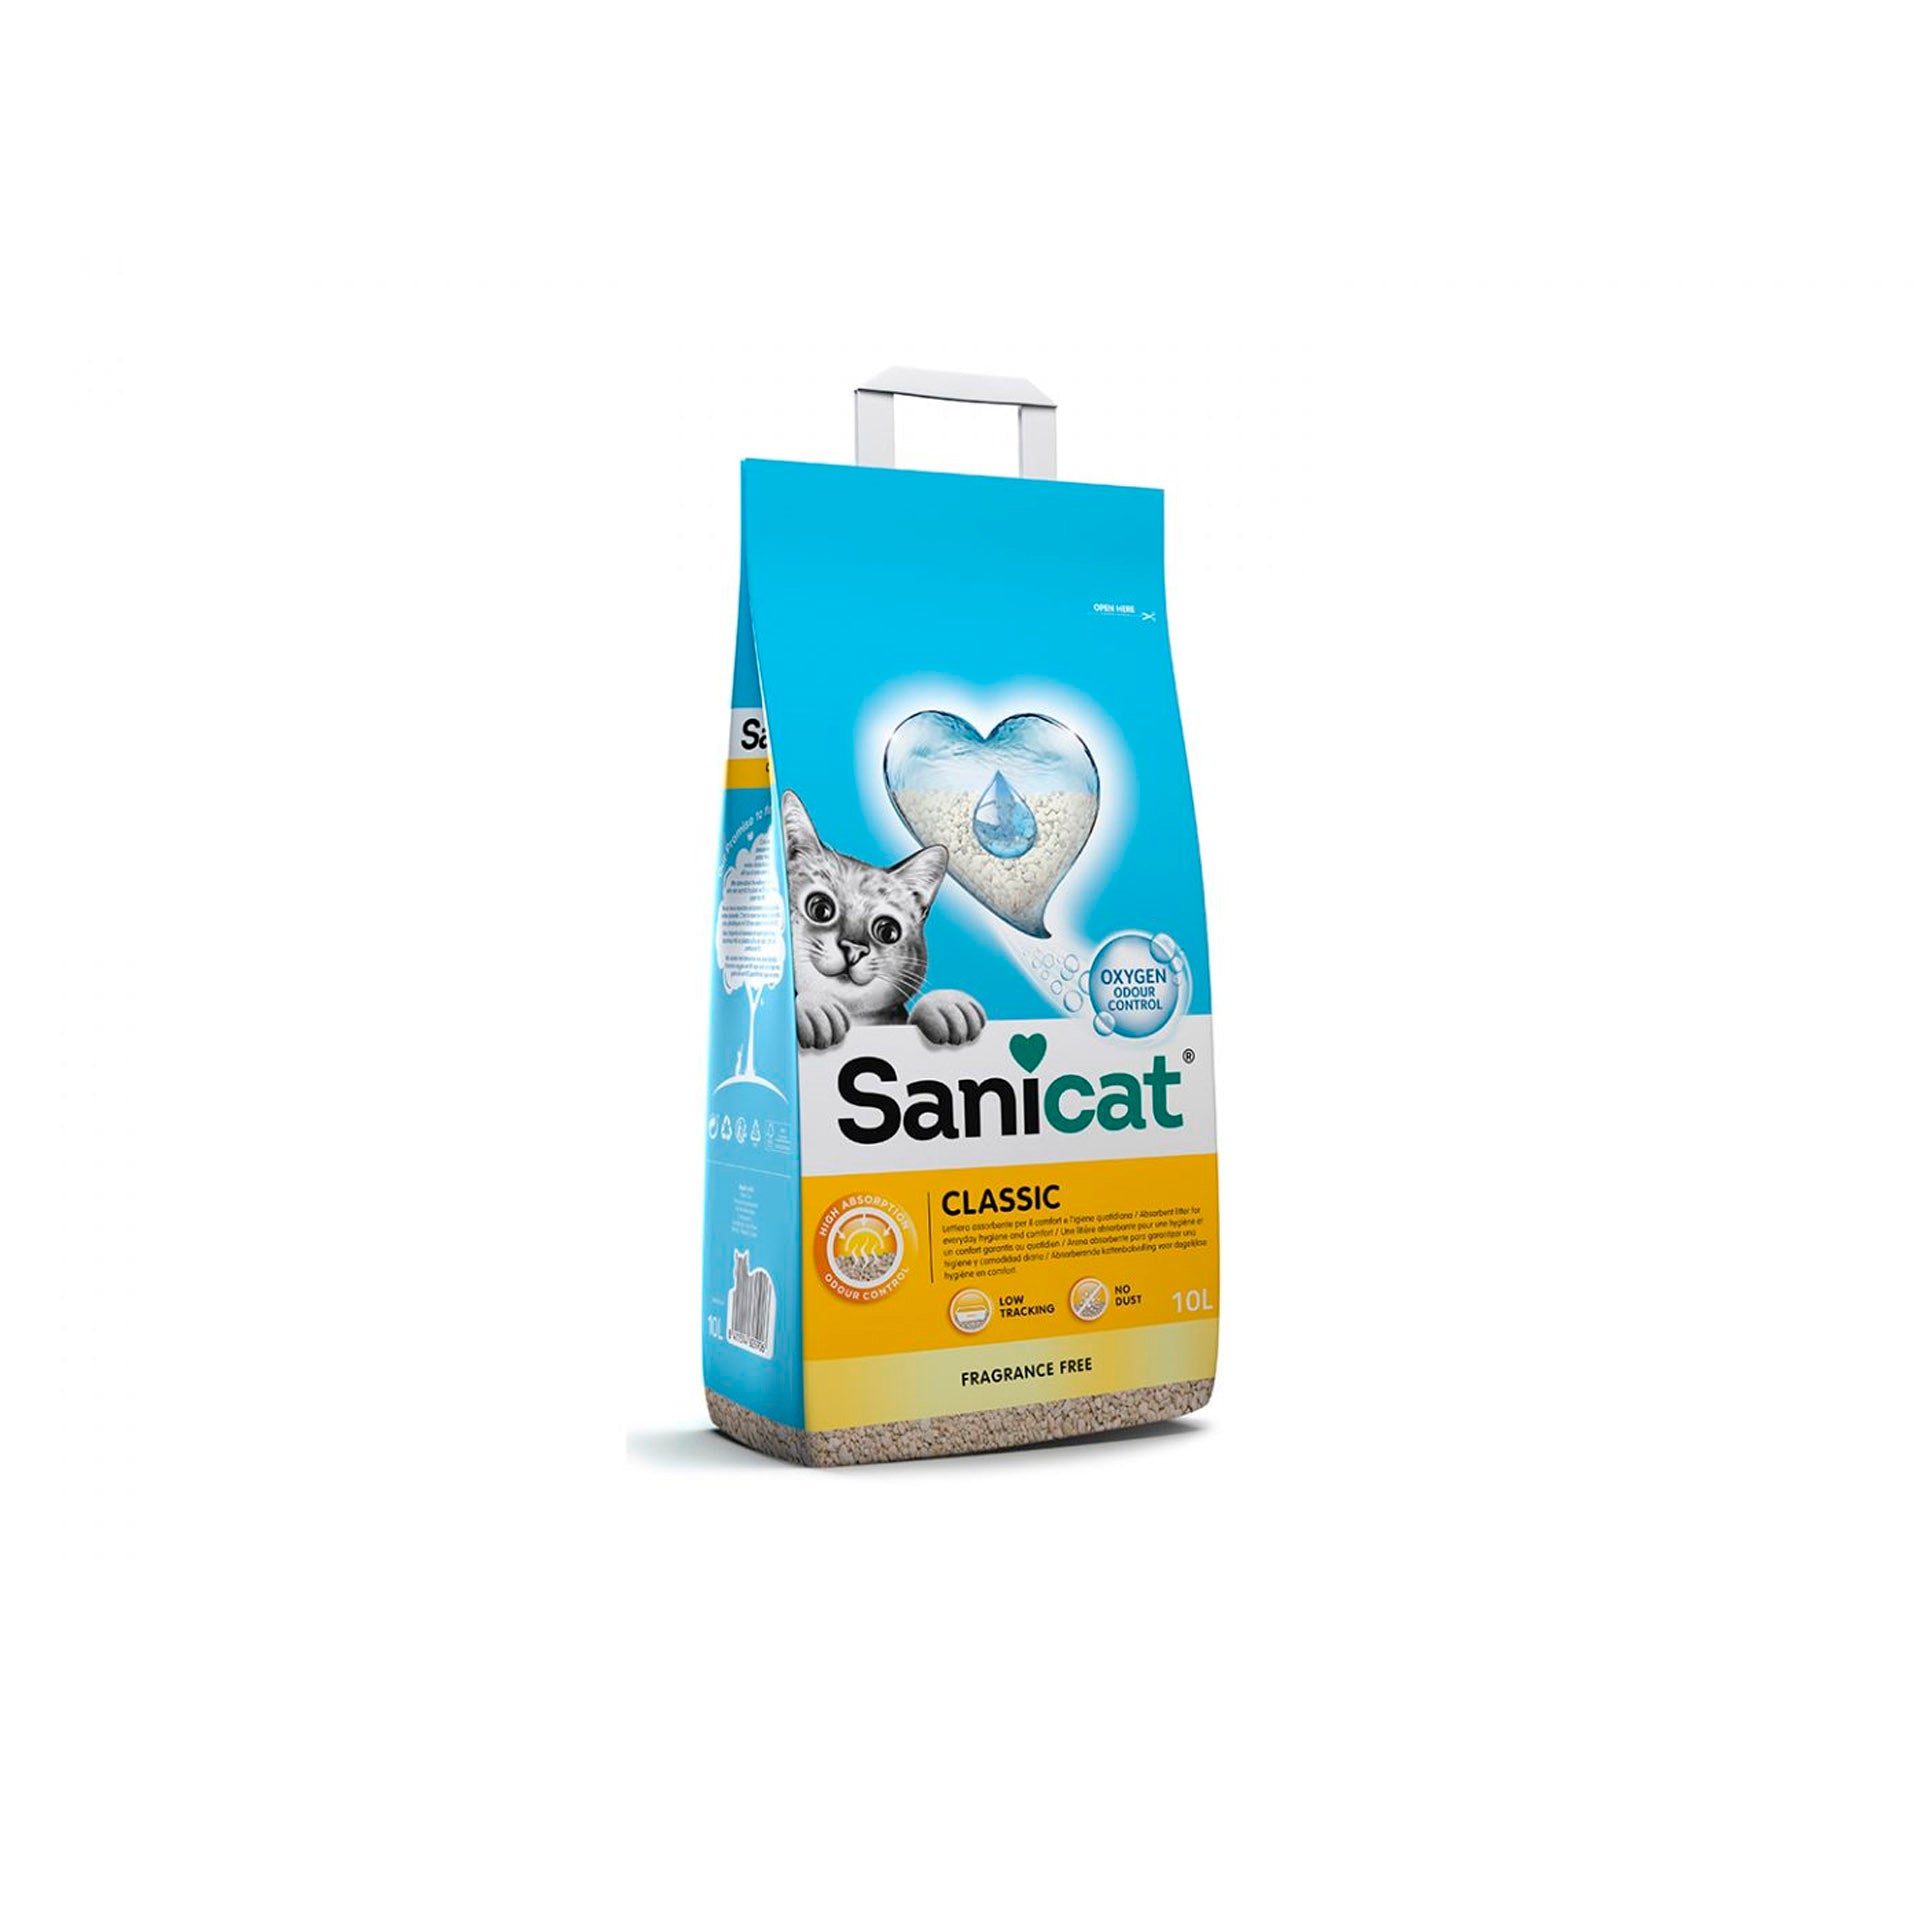 Sanicat Classic Areia 10 L